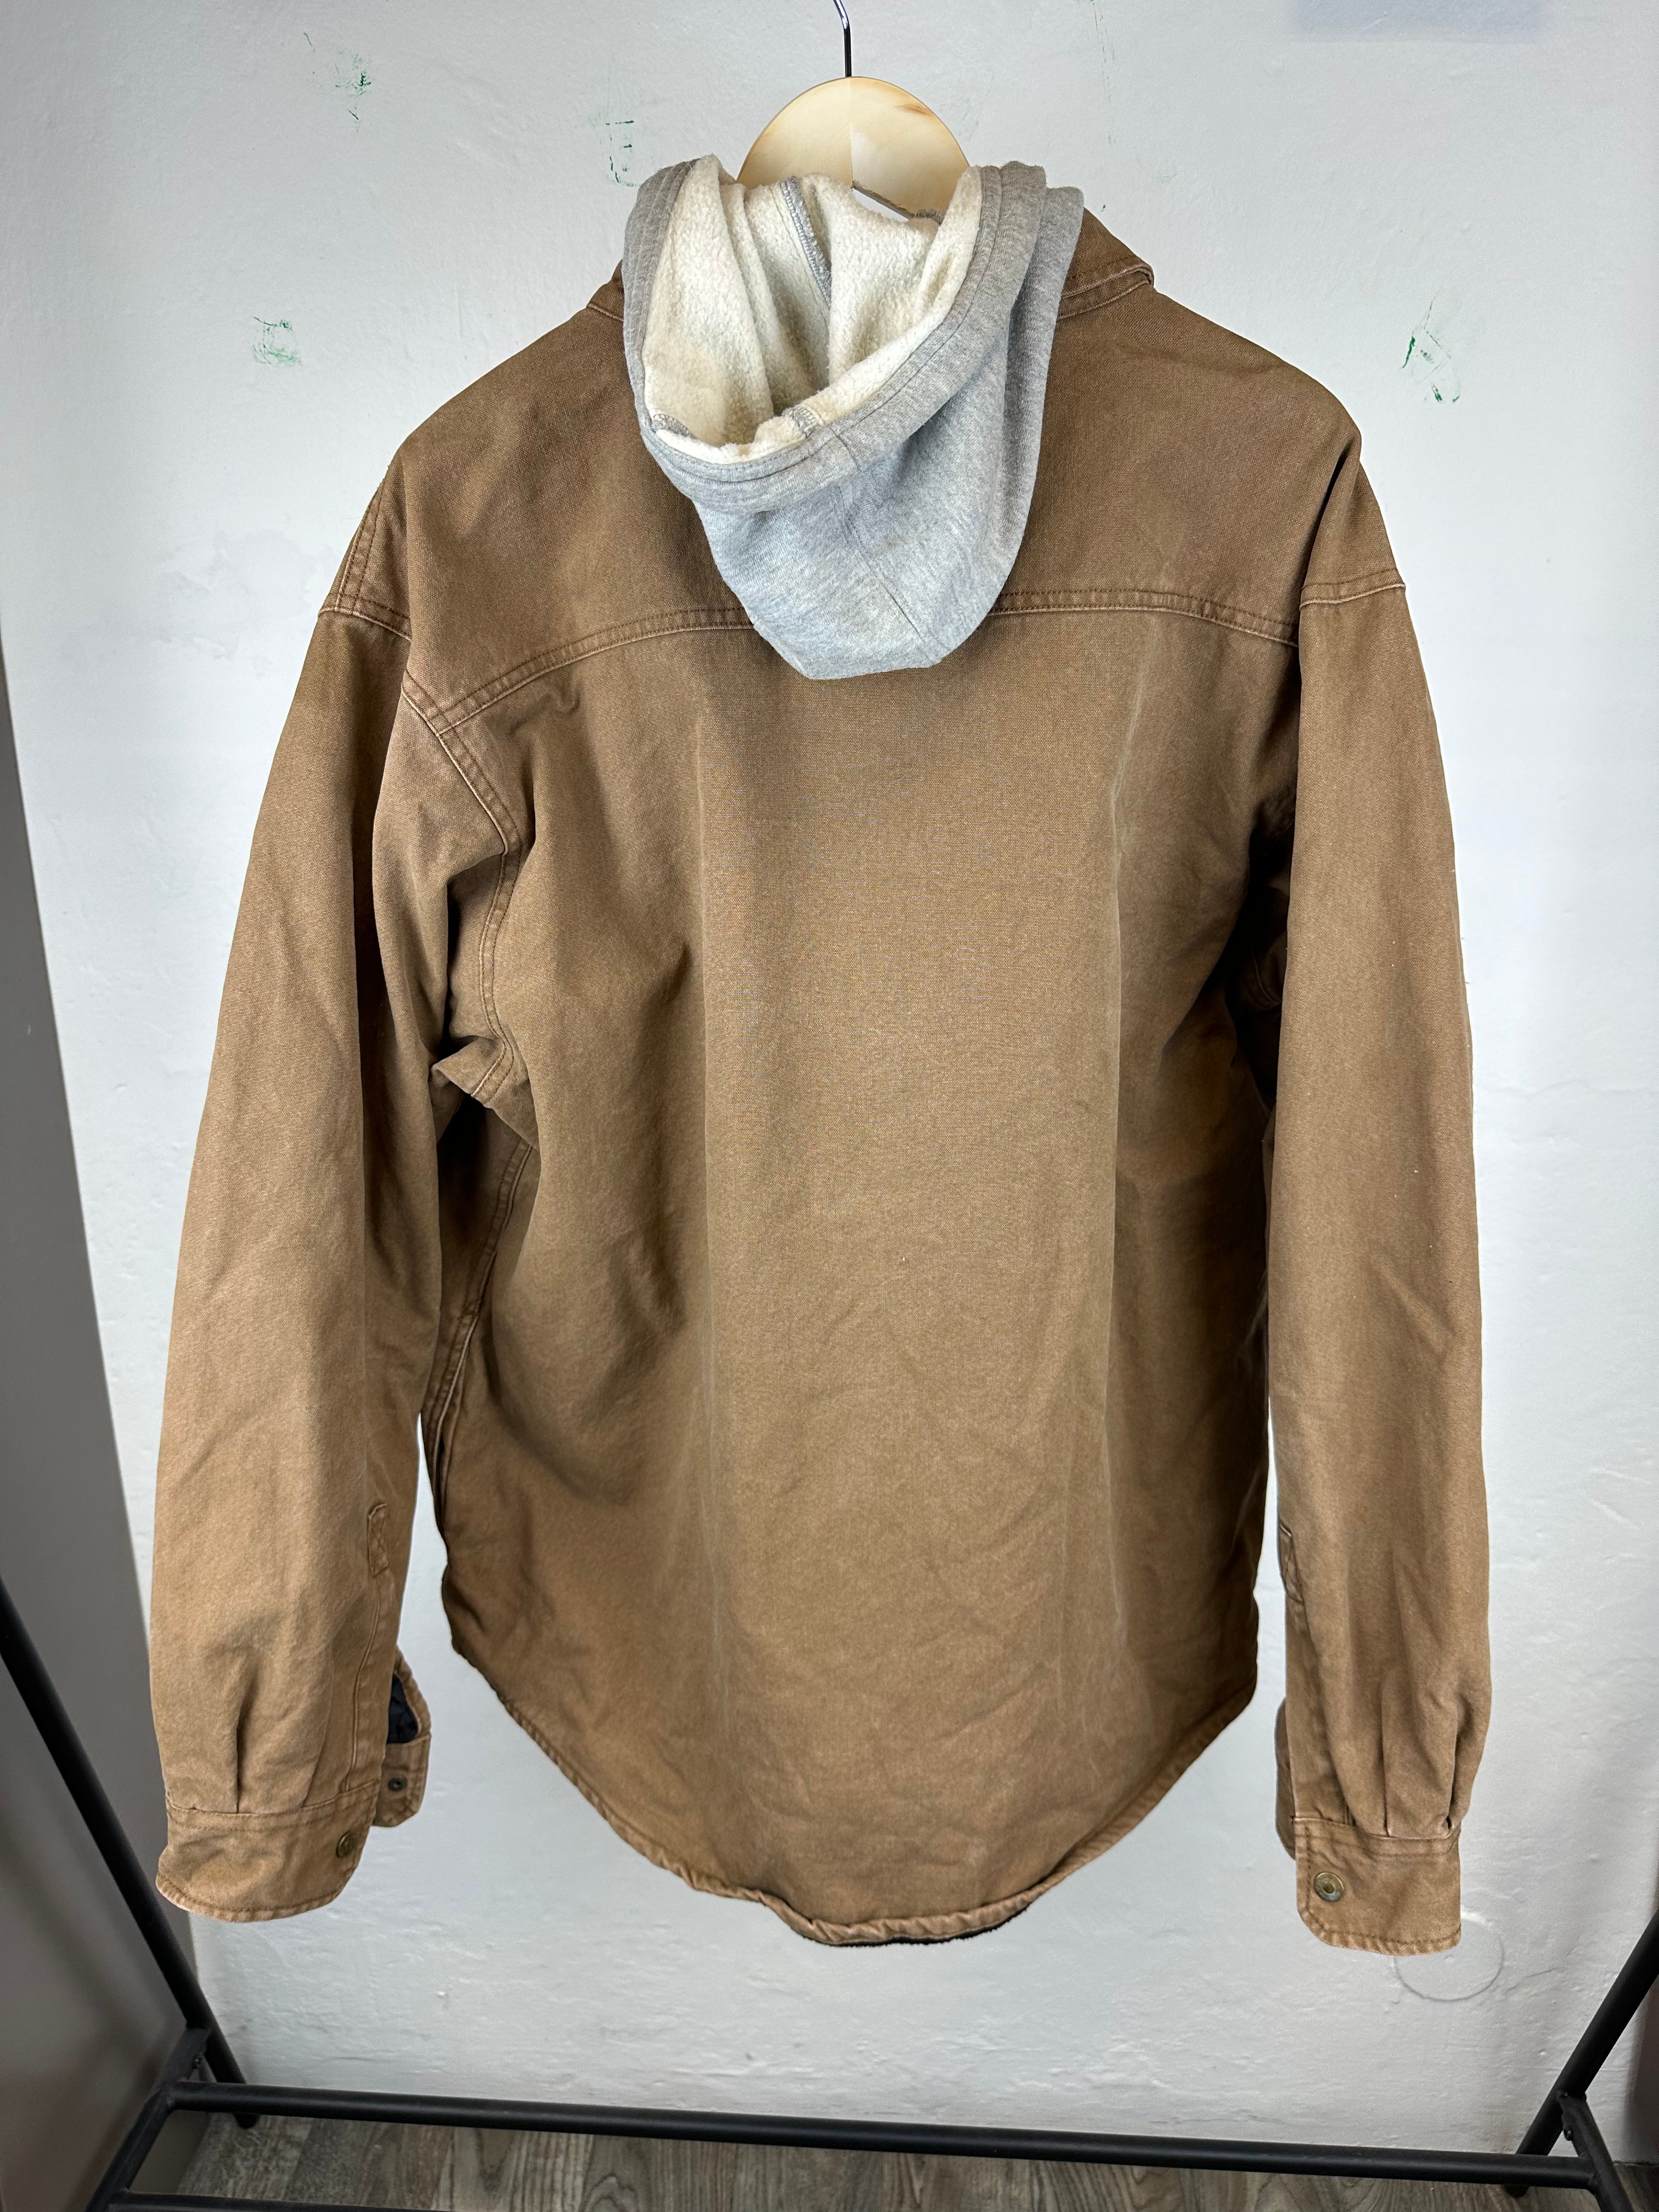 Vintage Hooded Overshirt Jacket - size XL